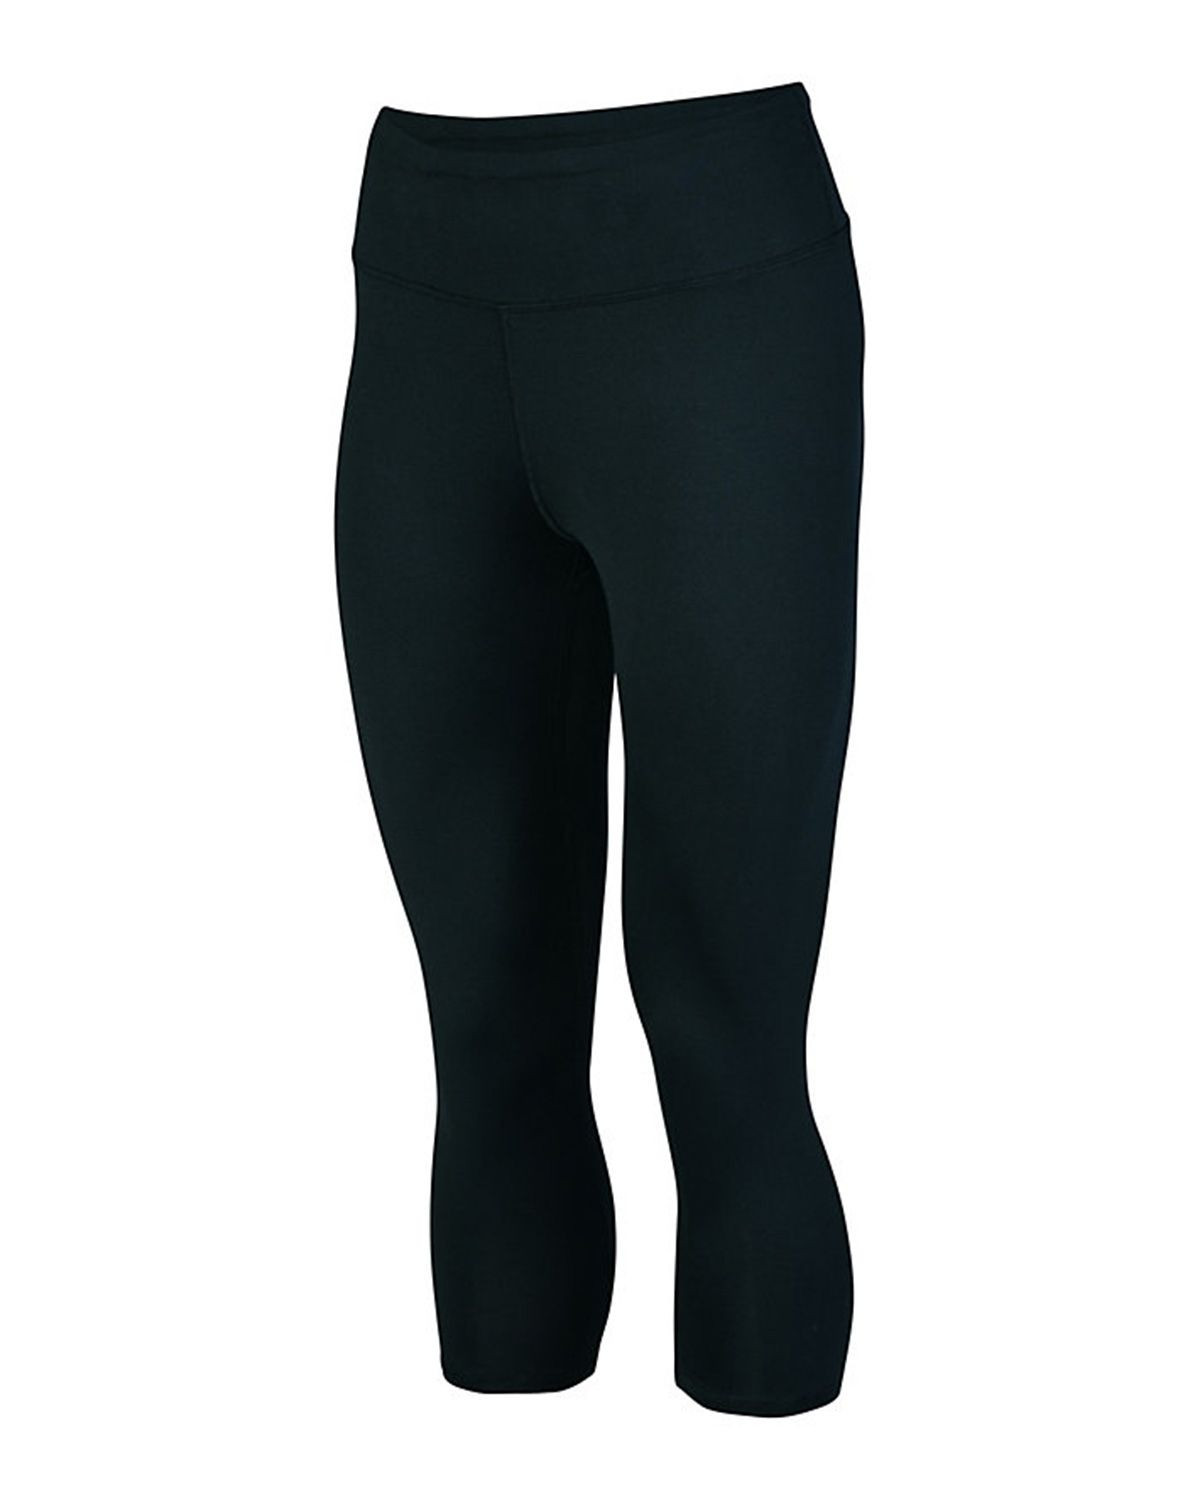 Augusta Sportswear 2628 Women's Hyperform Compression Capri - Black - XS #capri